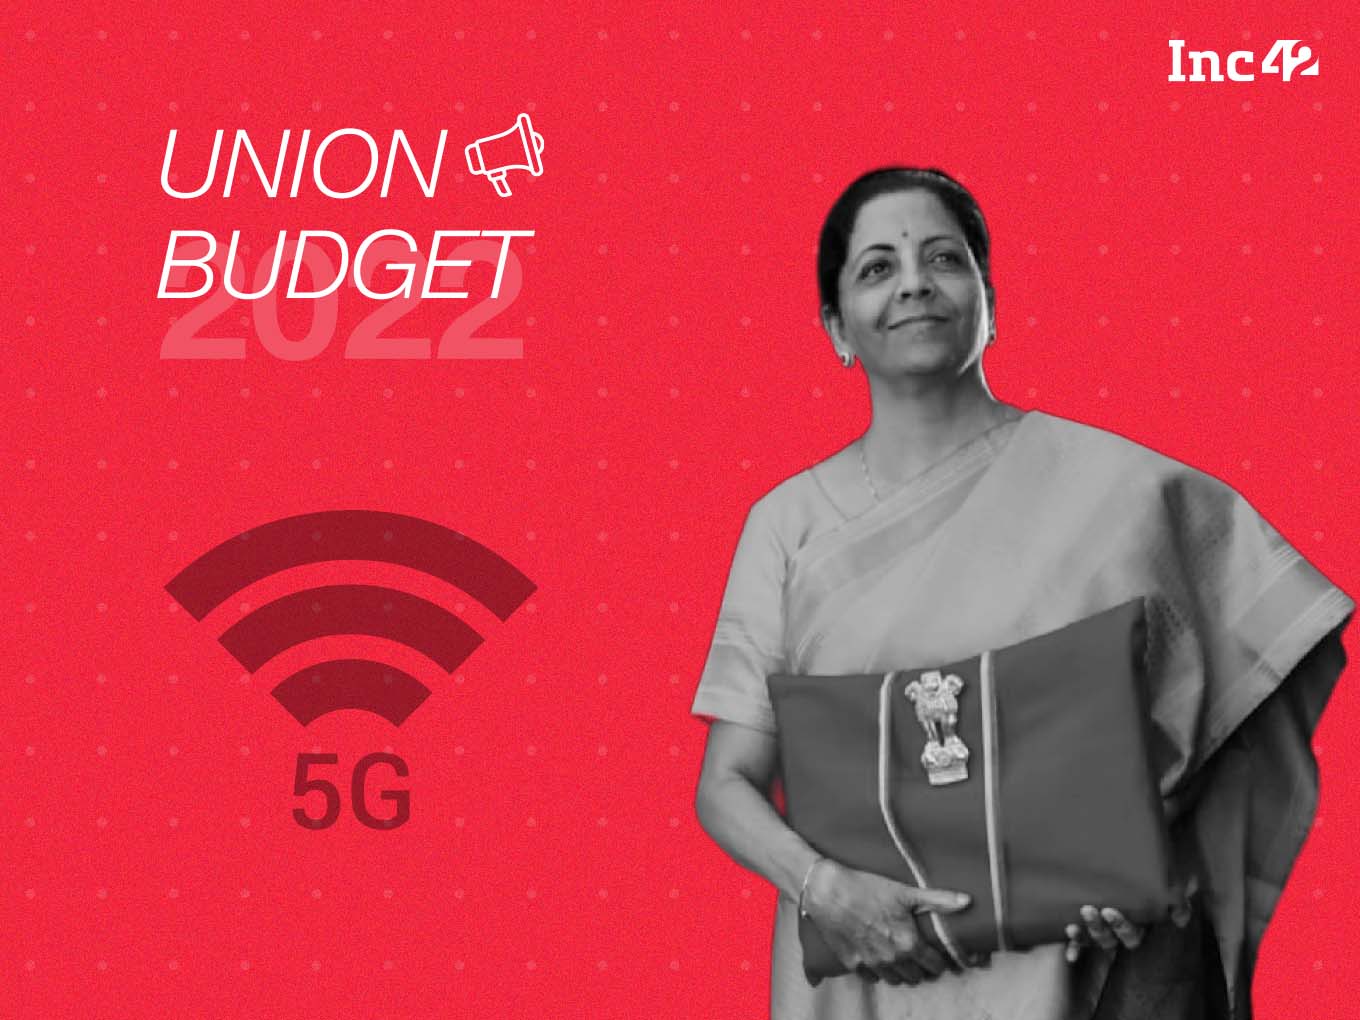 Union Budget 2022: FM Announces 5G Spectrum Auction & Network Rollout For Telcos In FY23